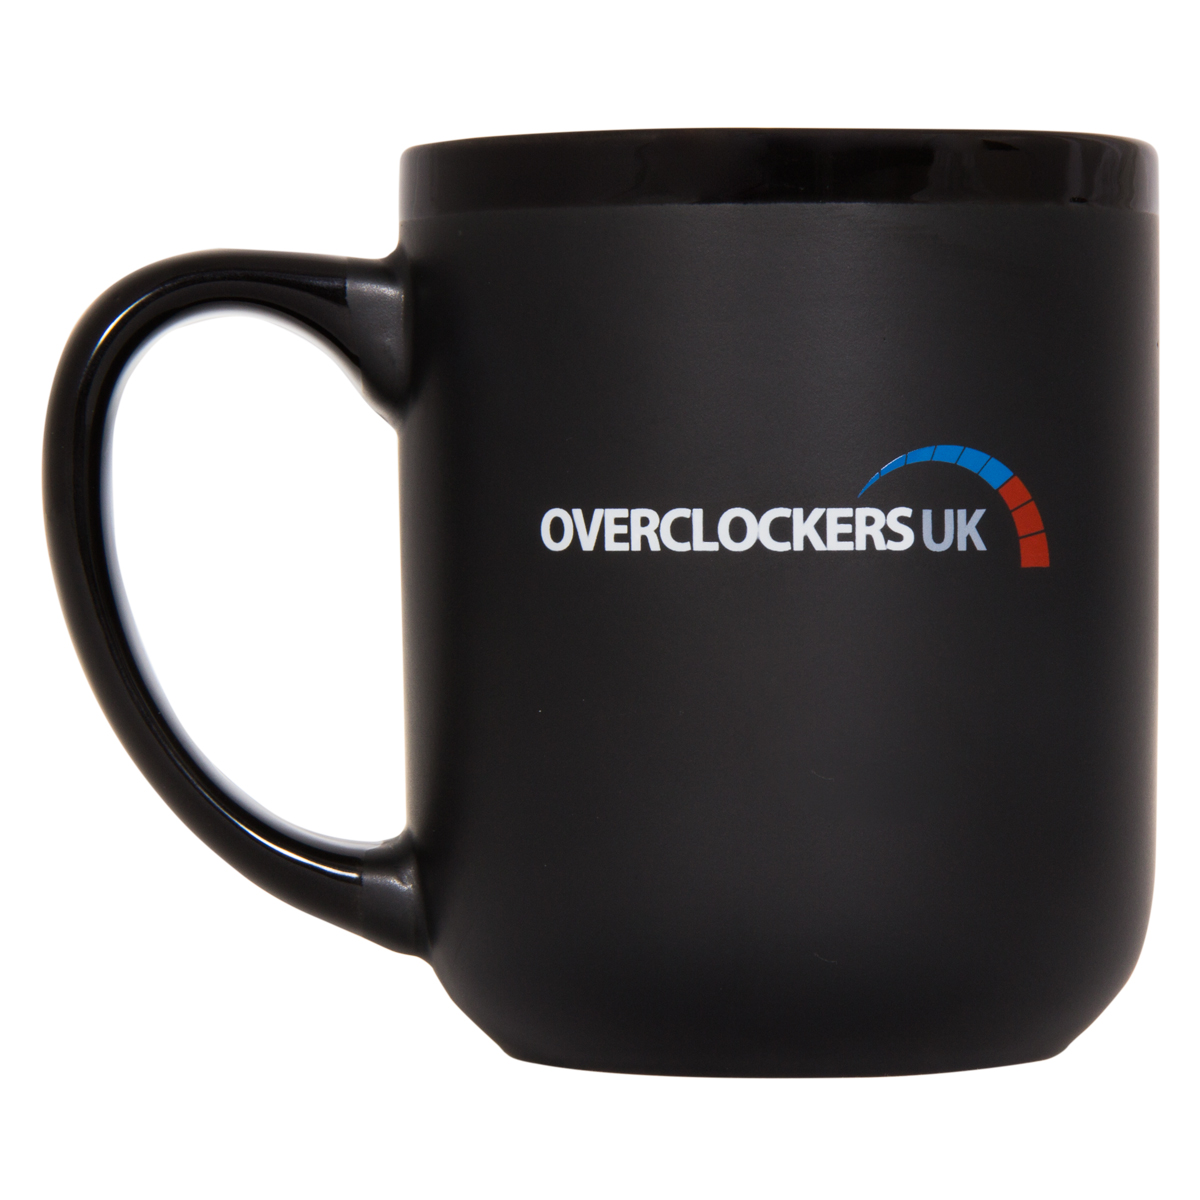 Overclockers UK - OcUK Official Overclockers UK Extreme Gaming Mug XL